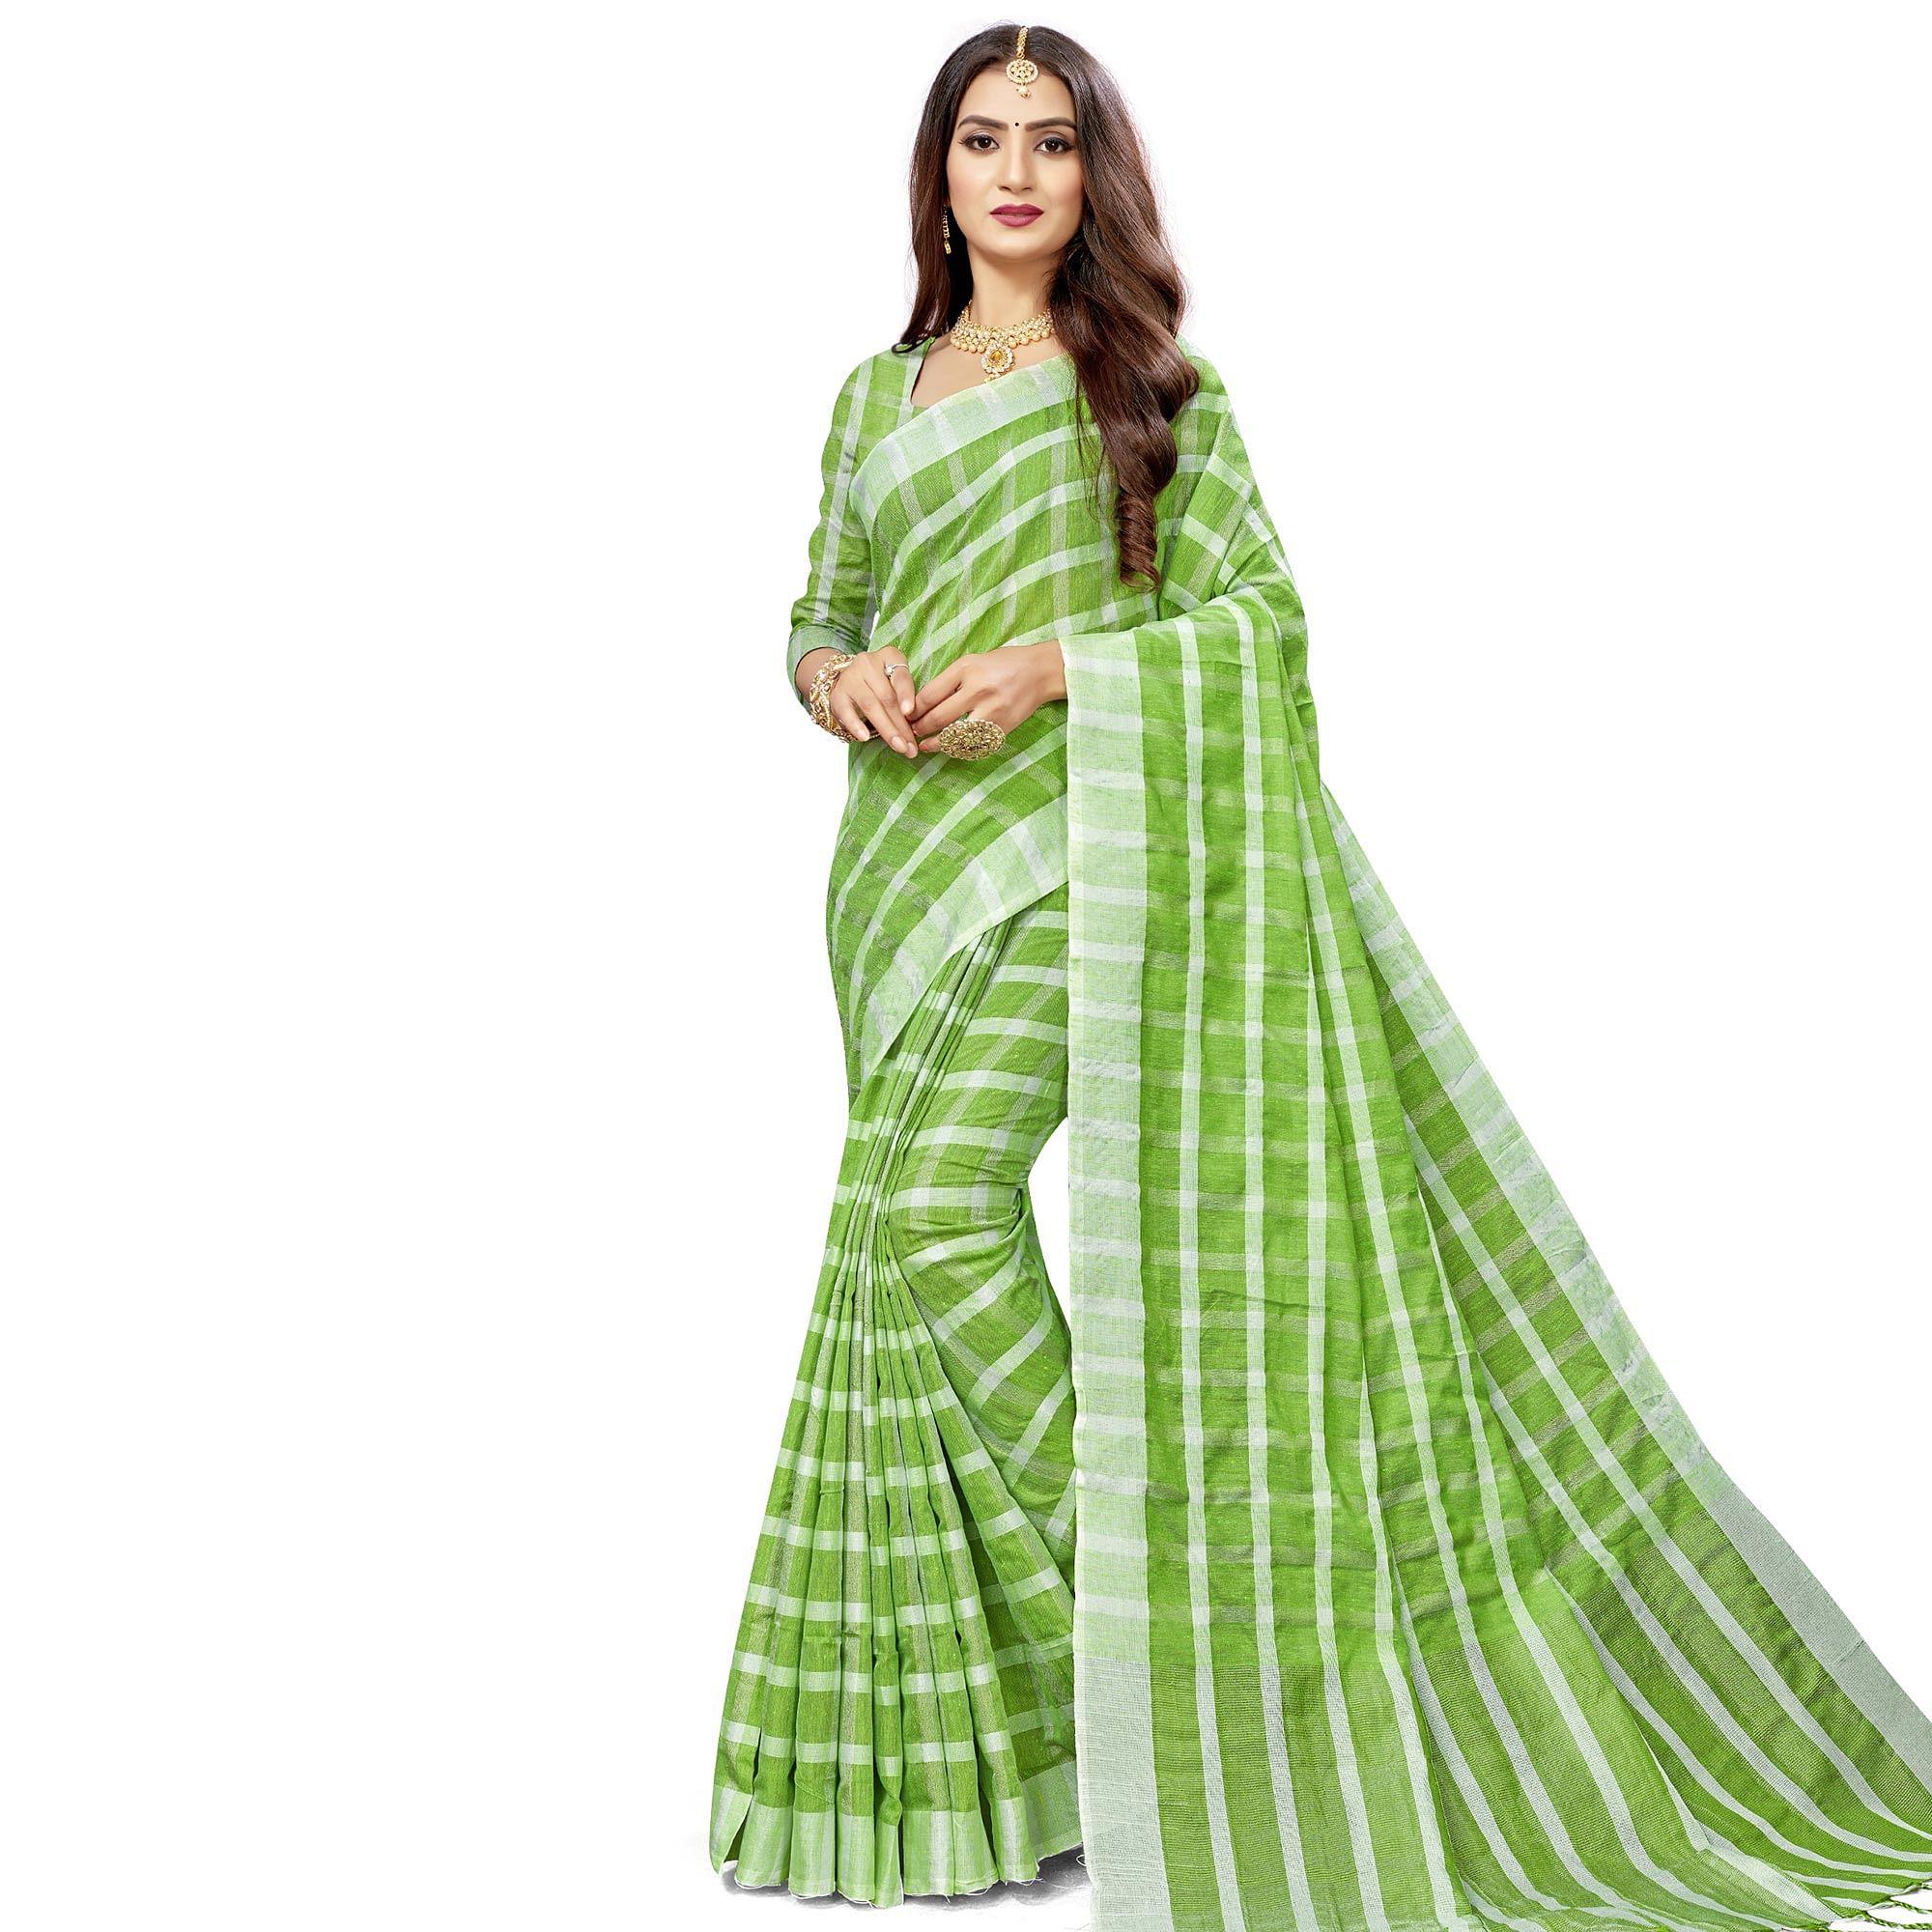 Flaunt Green Colored Fesive Wear Checks Print Cotton Silk Saree With Tassels - Peachmode